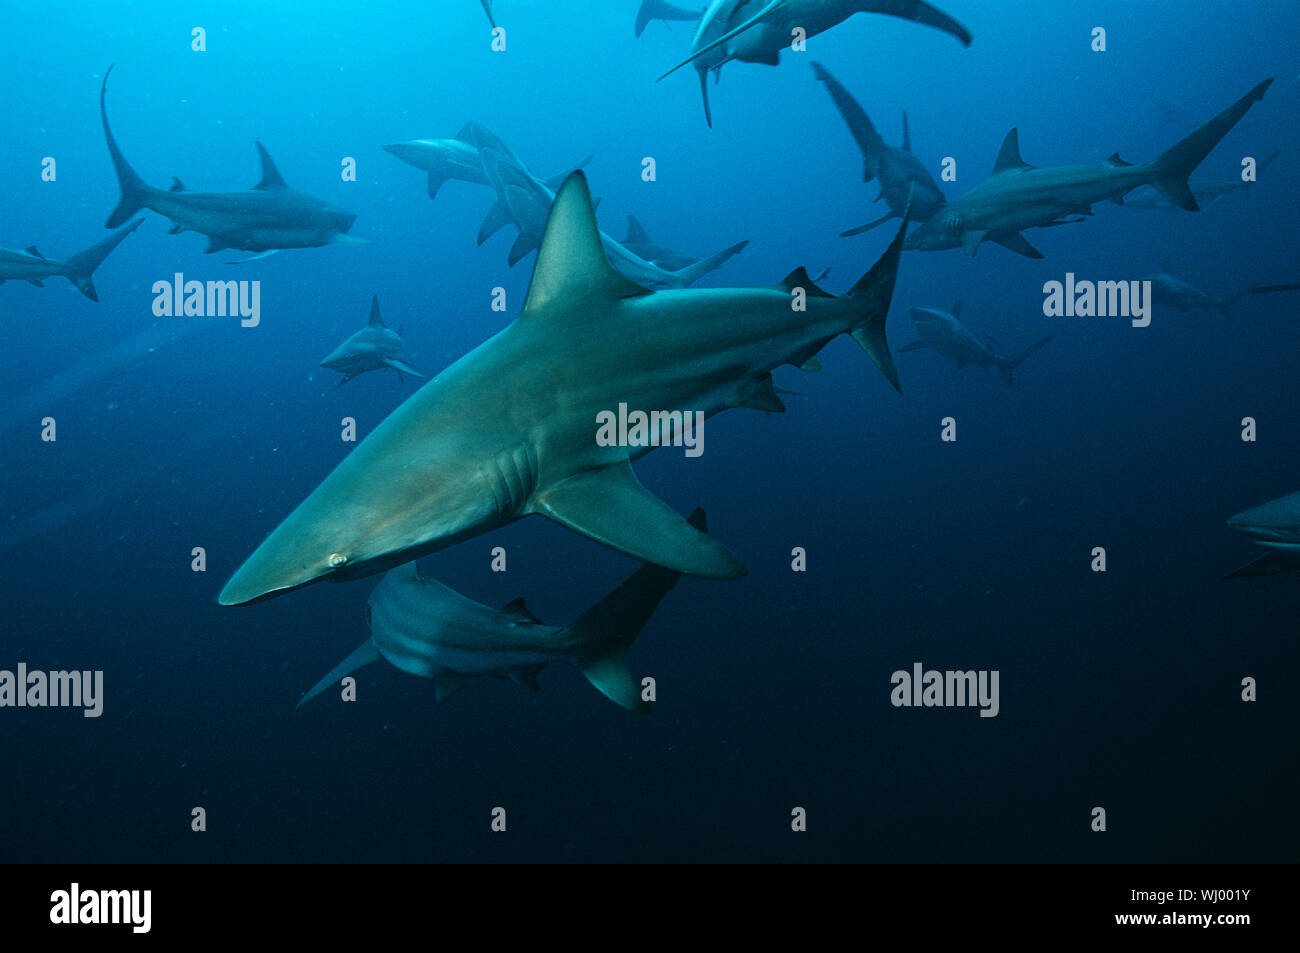 Aliwal Shoal, Indian Ocean, South Africa, blacktip sharks (Carcharhinus limbatus) swimming in ocean Stock Photo